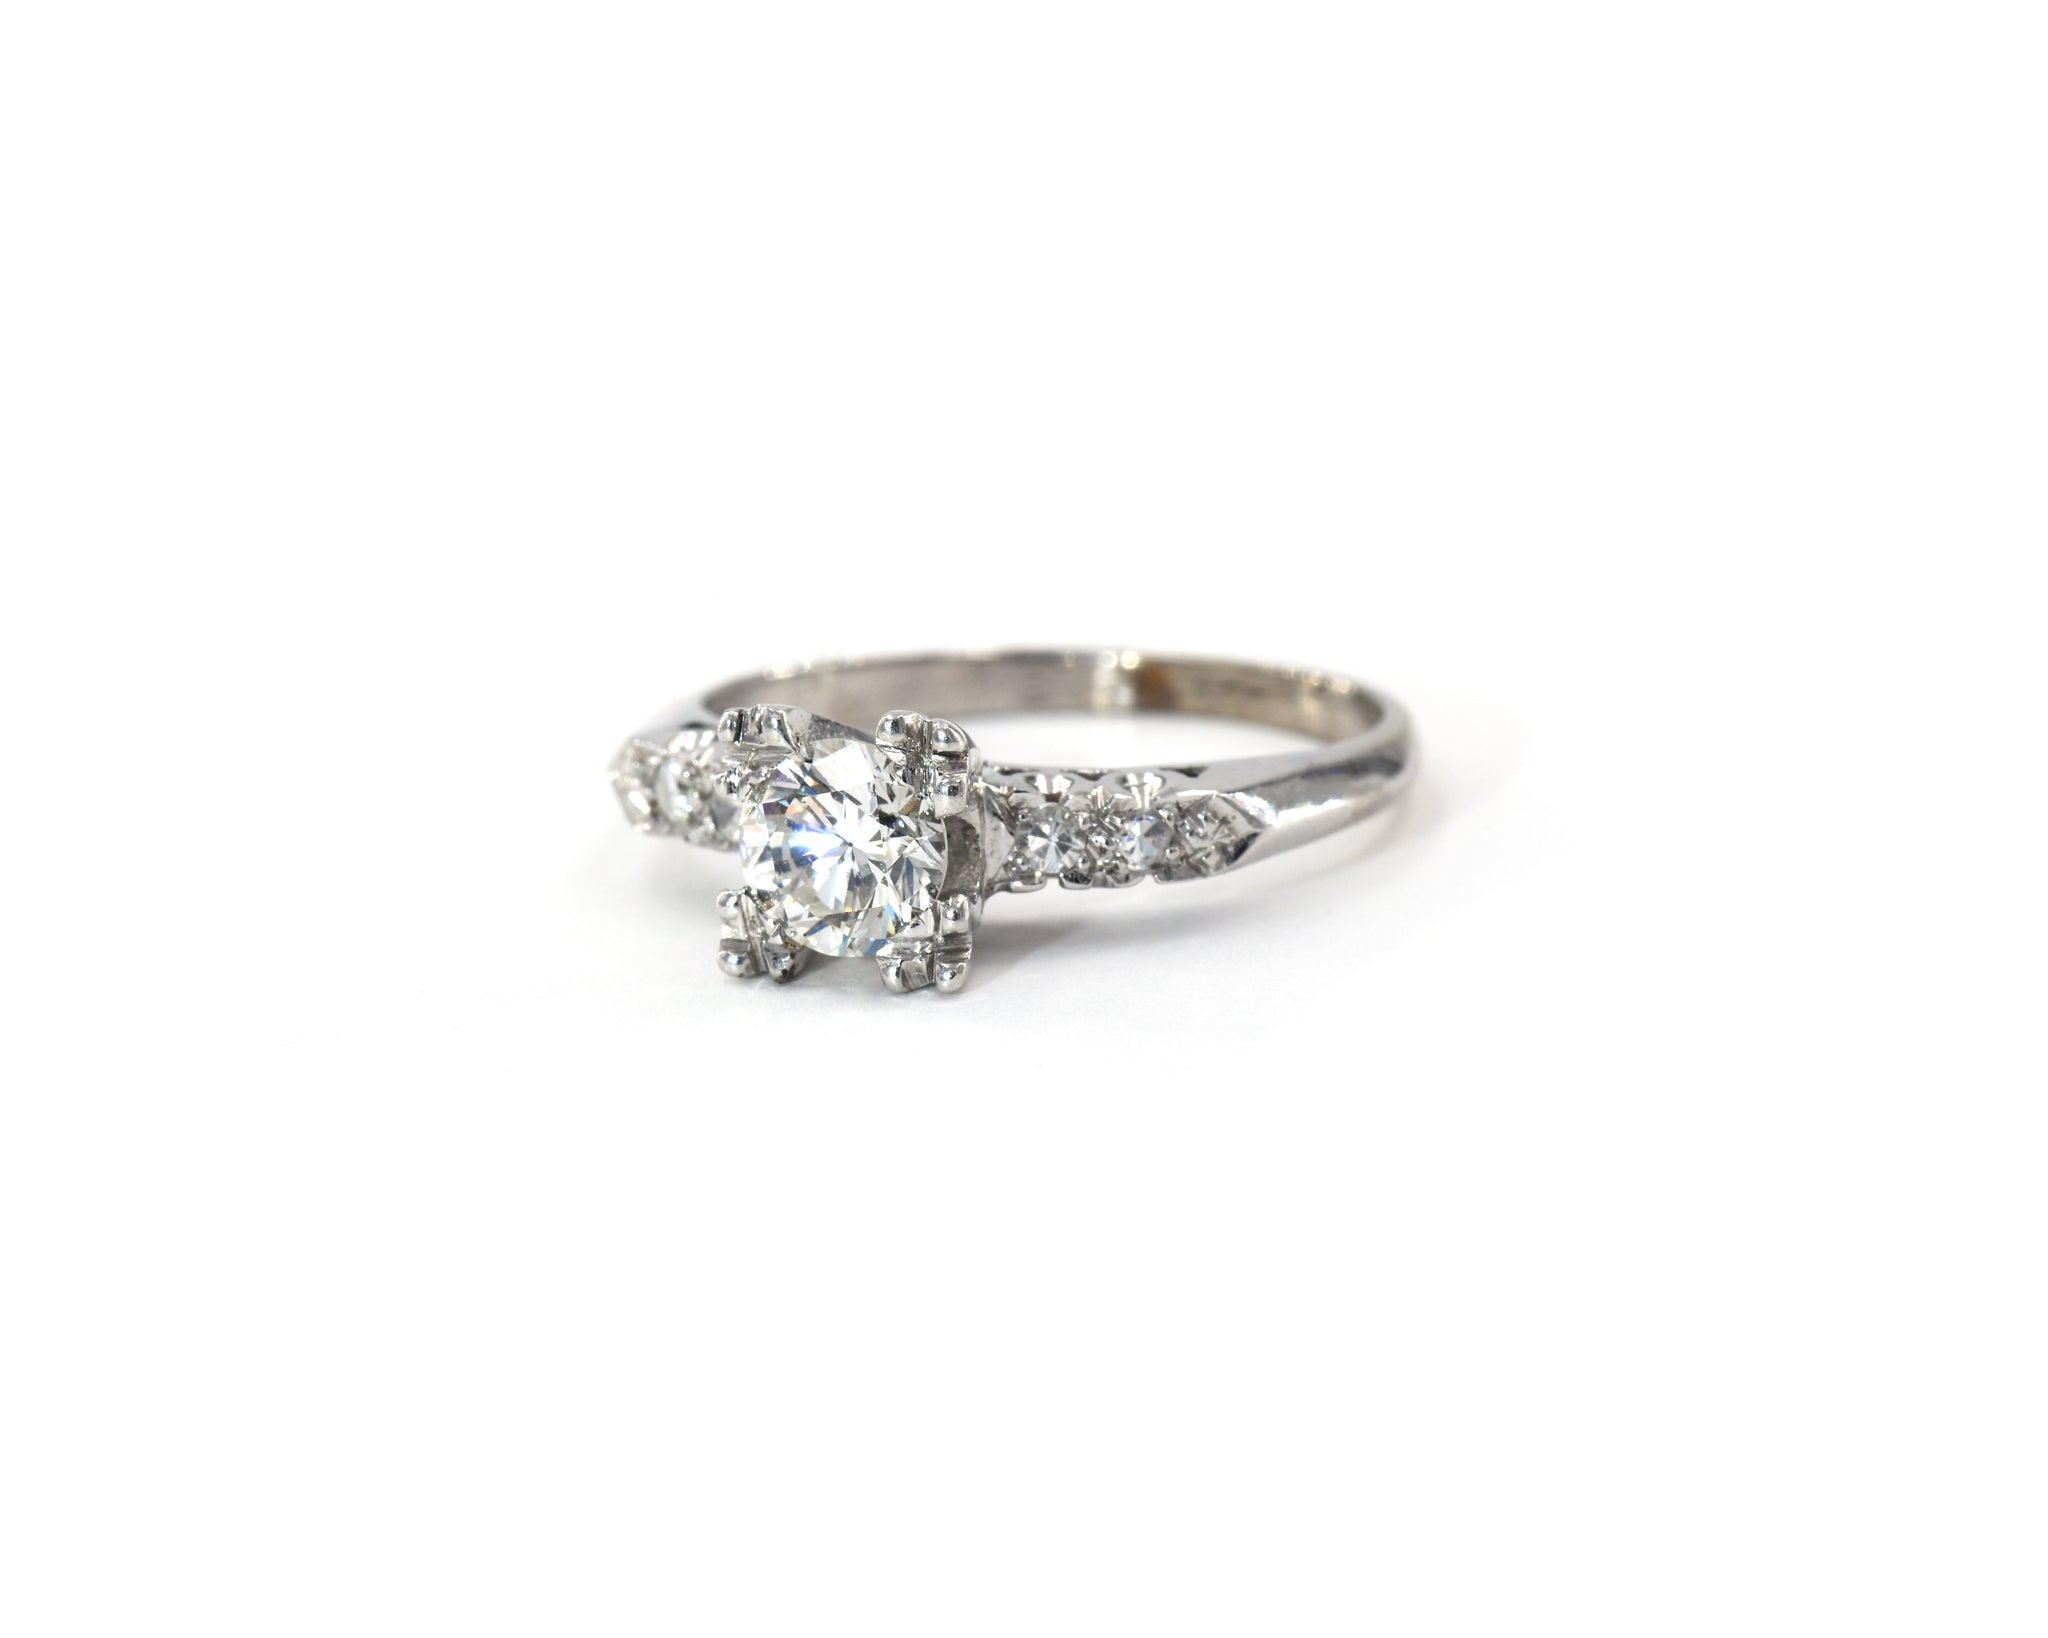 Vintage 1950's Squared Head Diamond Engagement Ring 14K White Gold